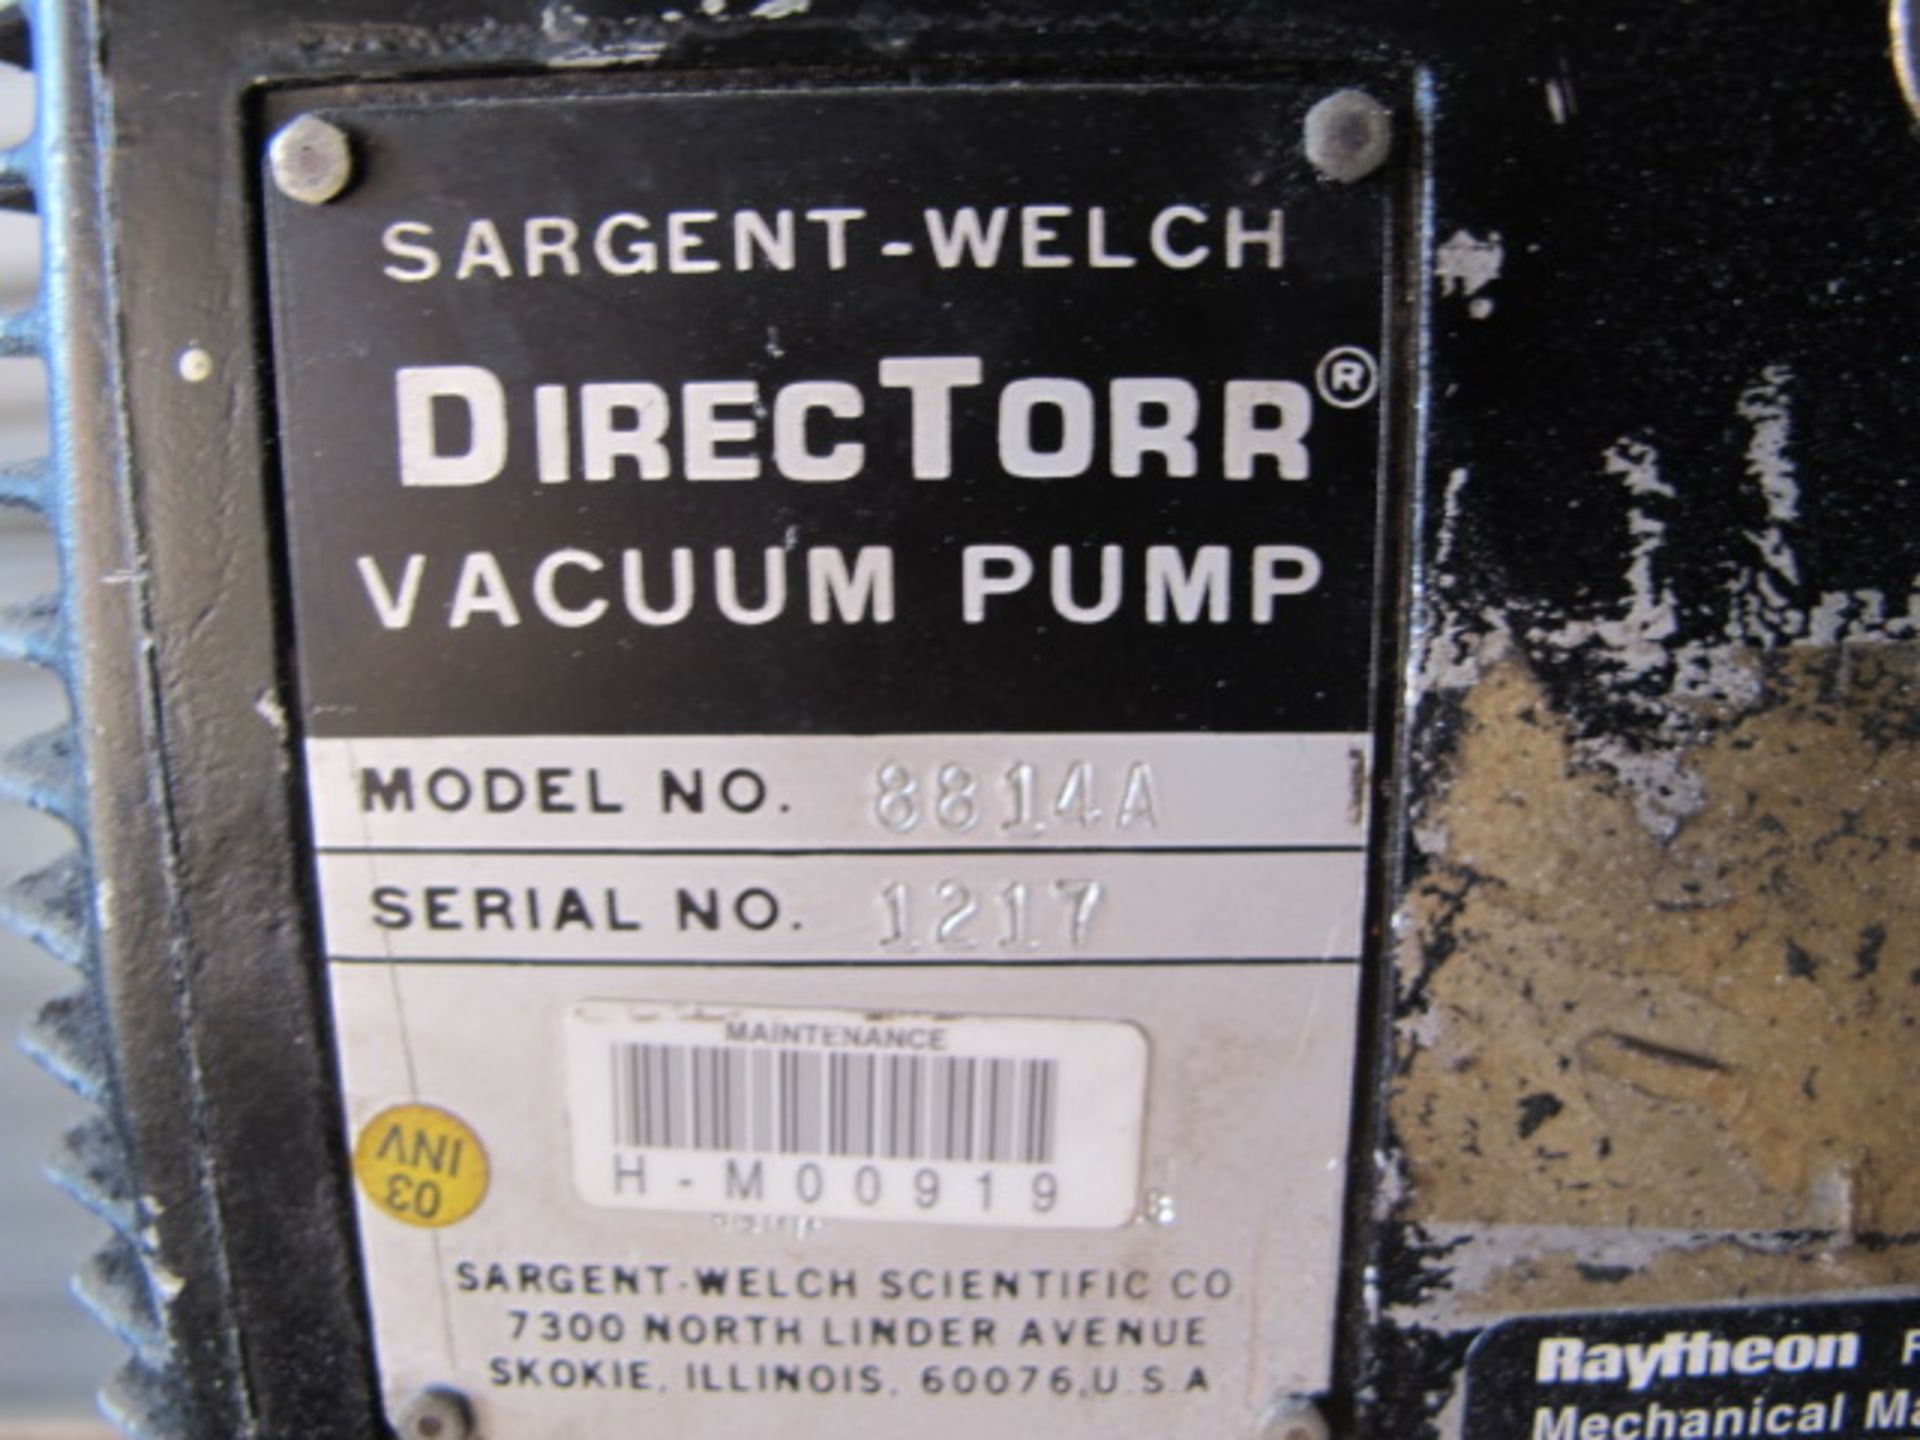 Sargent-Welch "Direct Torr" Vacuum Pump - Image 3 of 3